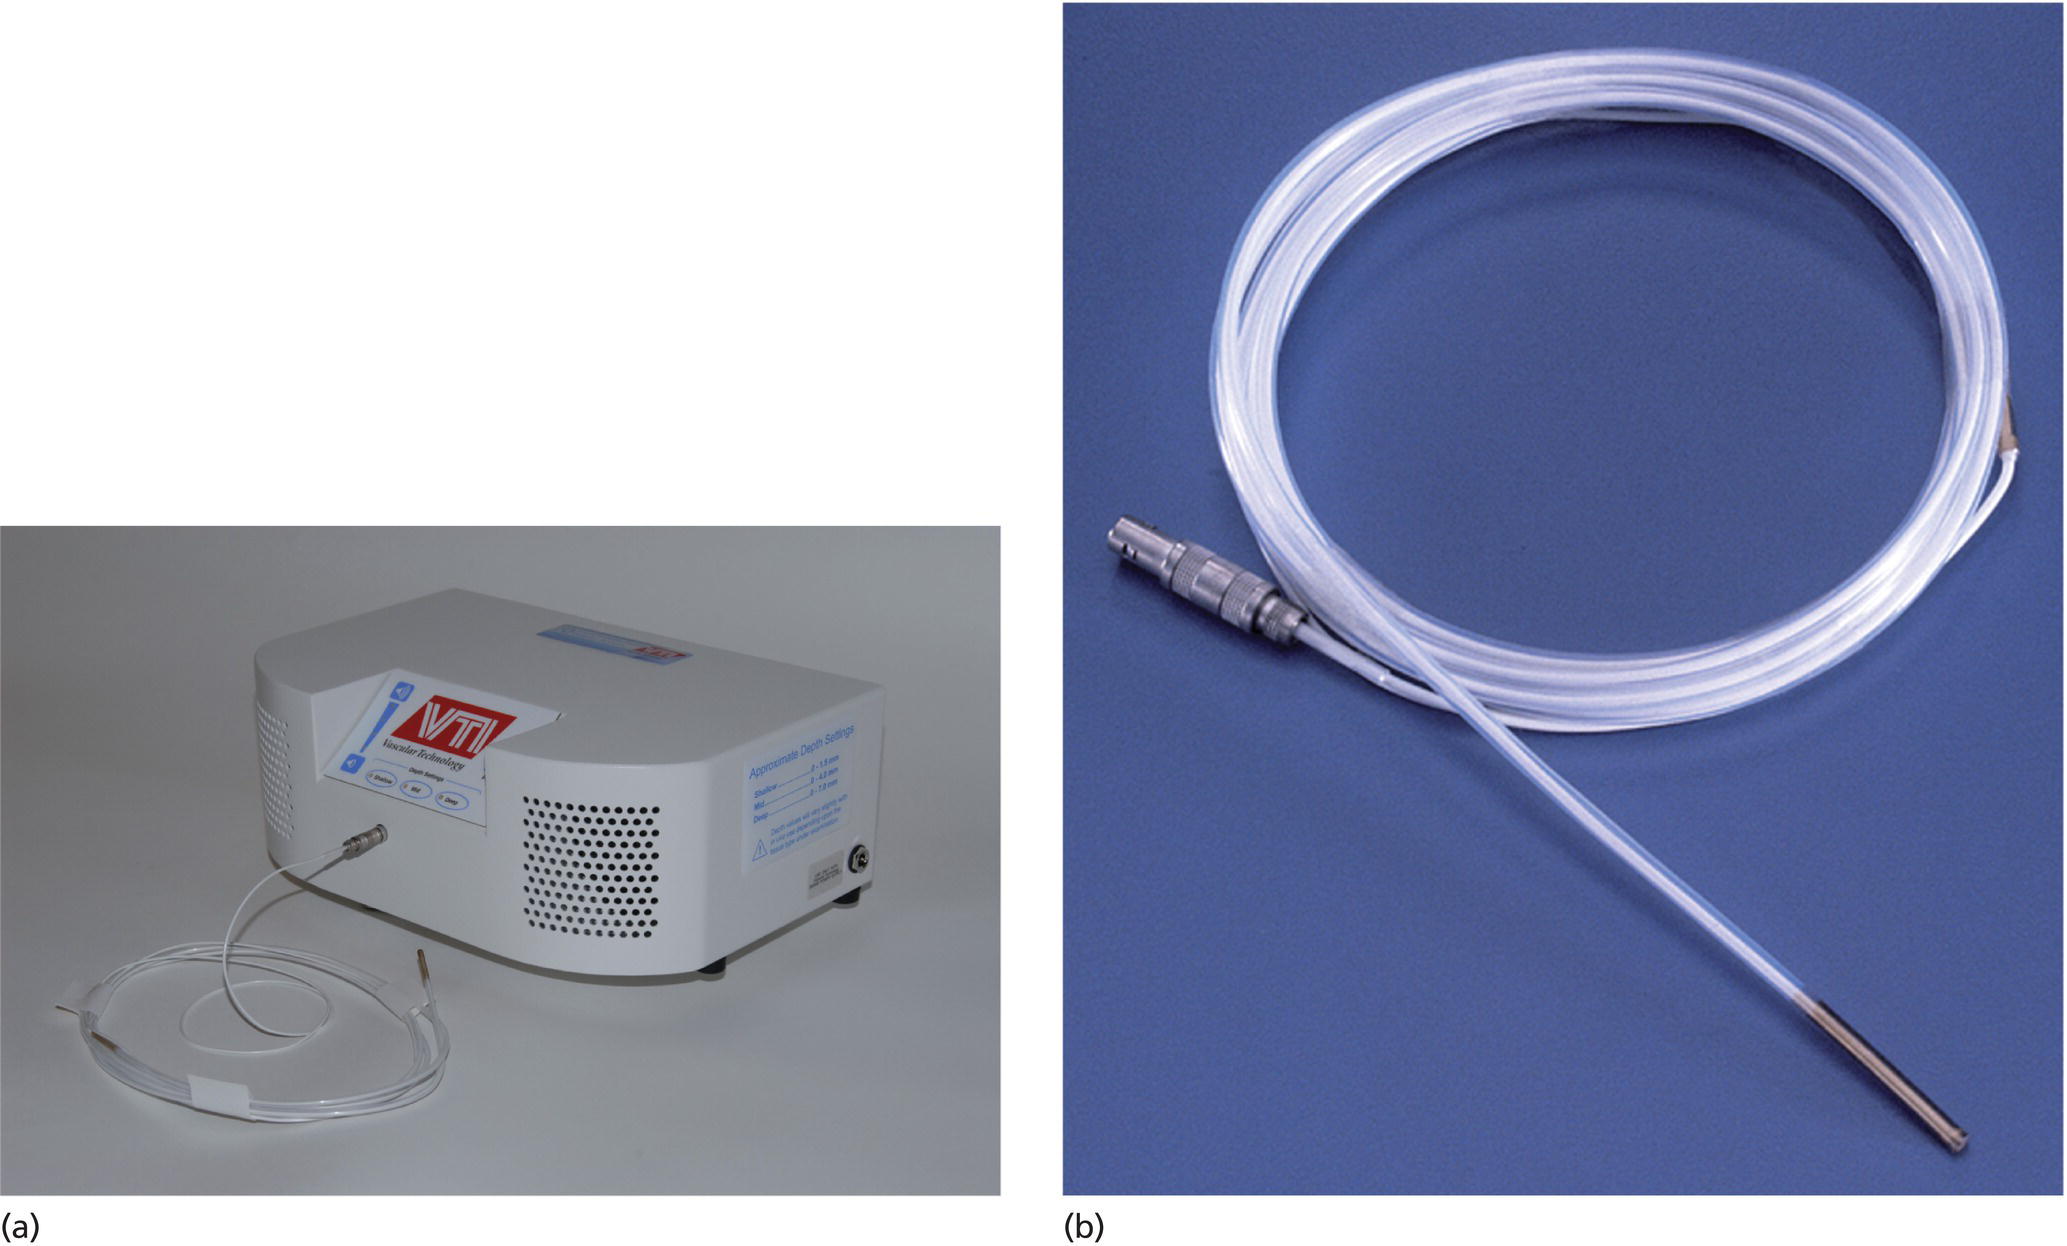 Photos depict VTI endoscopic Doppler system.